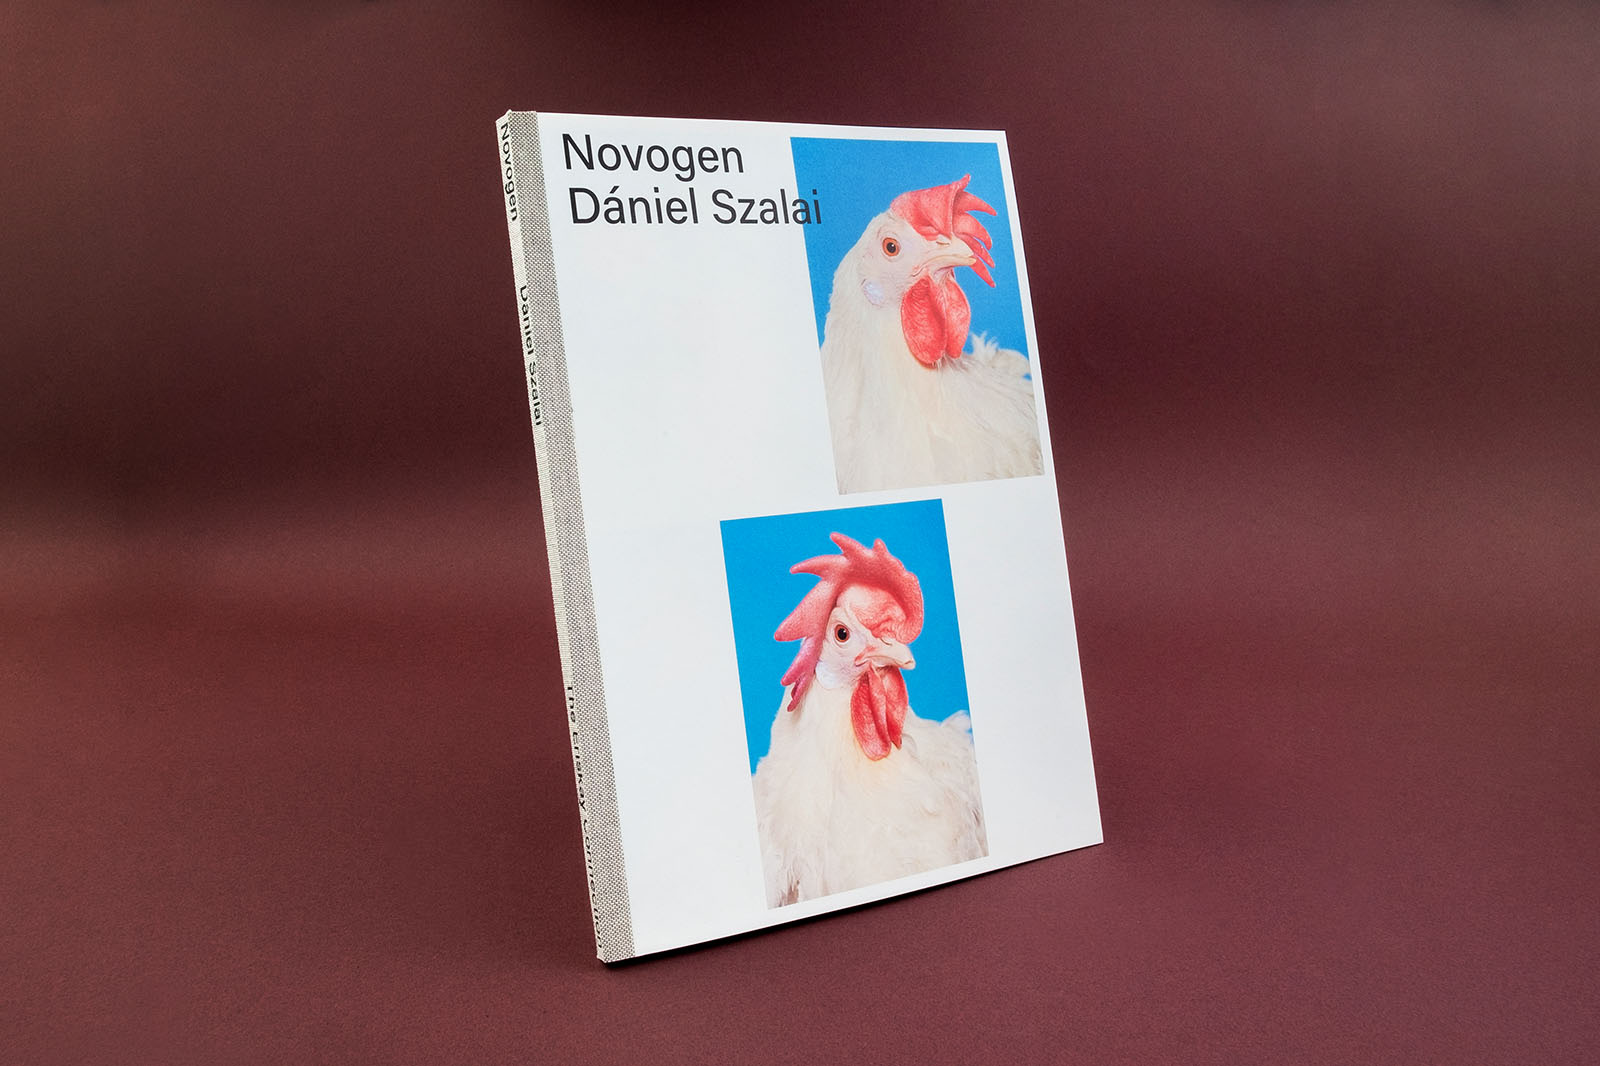 Daniel szalai novogen book eriskay connection 001a